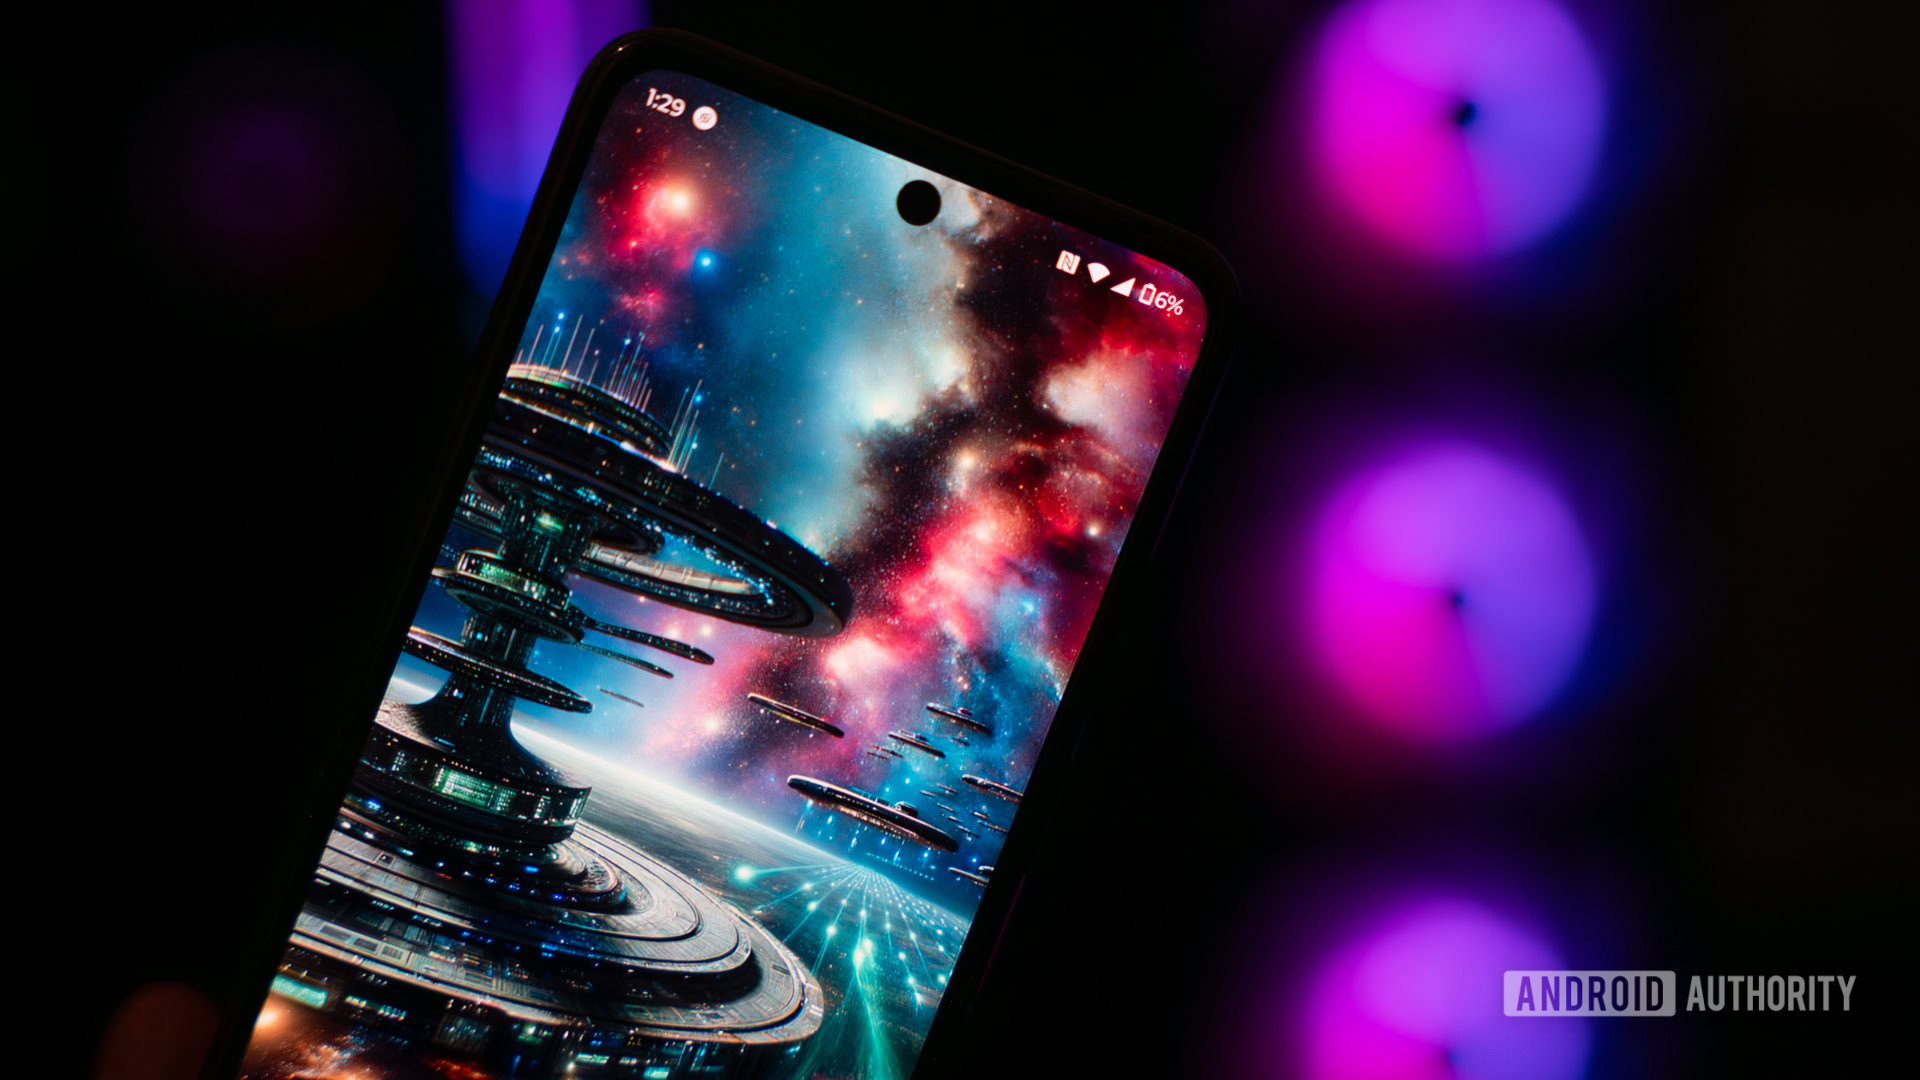 Sci fi wallpaper on smartphone